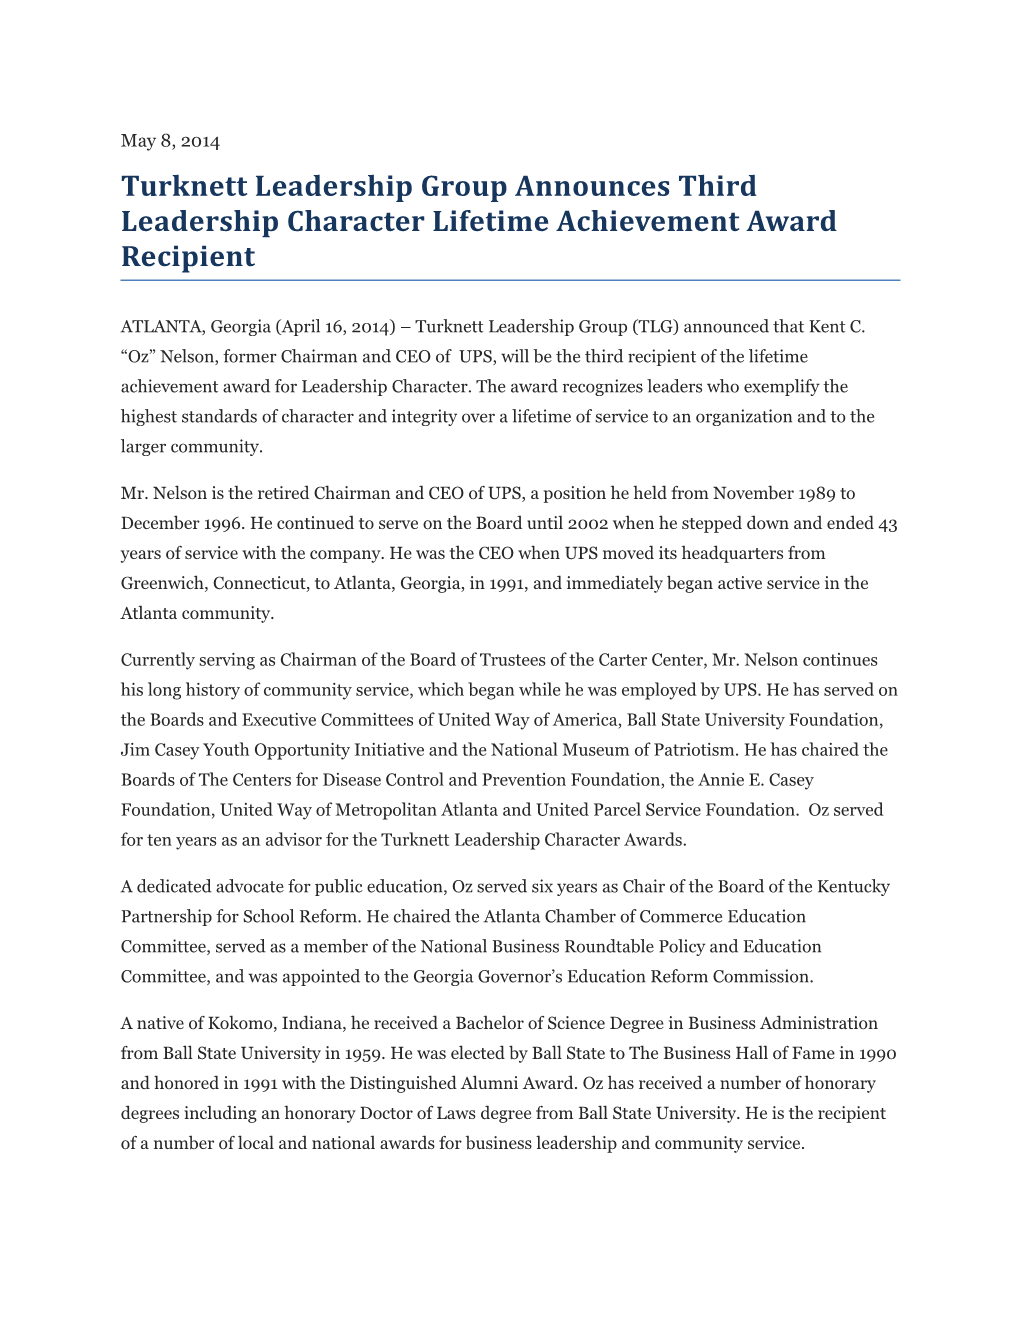 Turknett Leadership Group Announces Third Leadership Character Lifetime Achievement Award